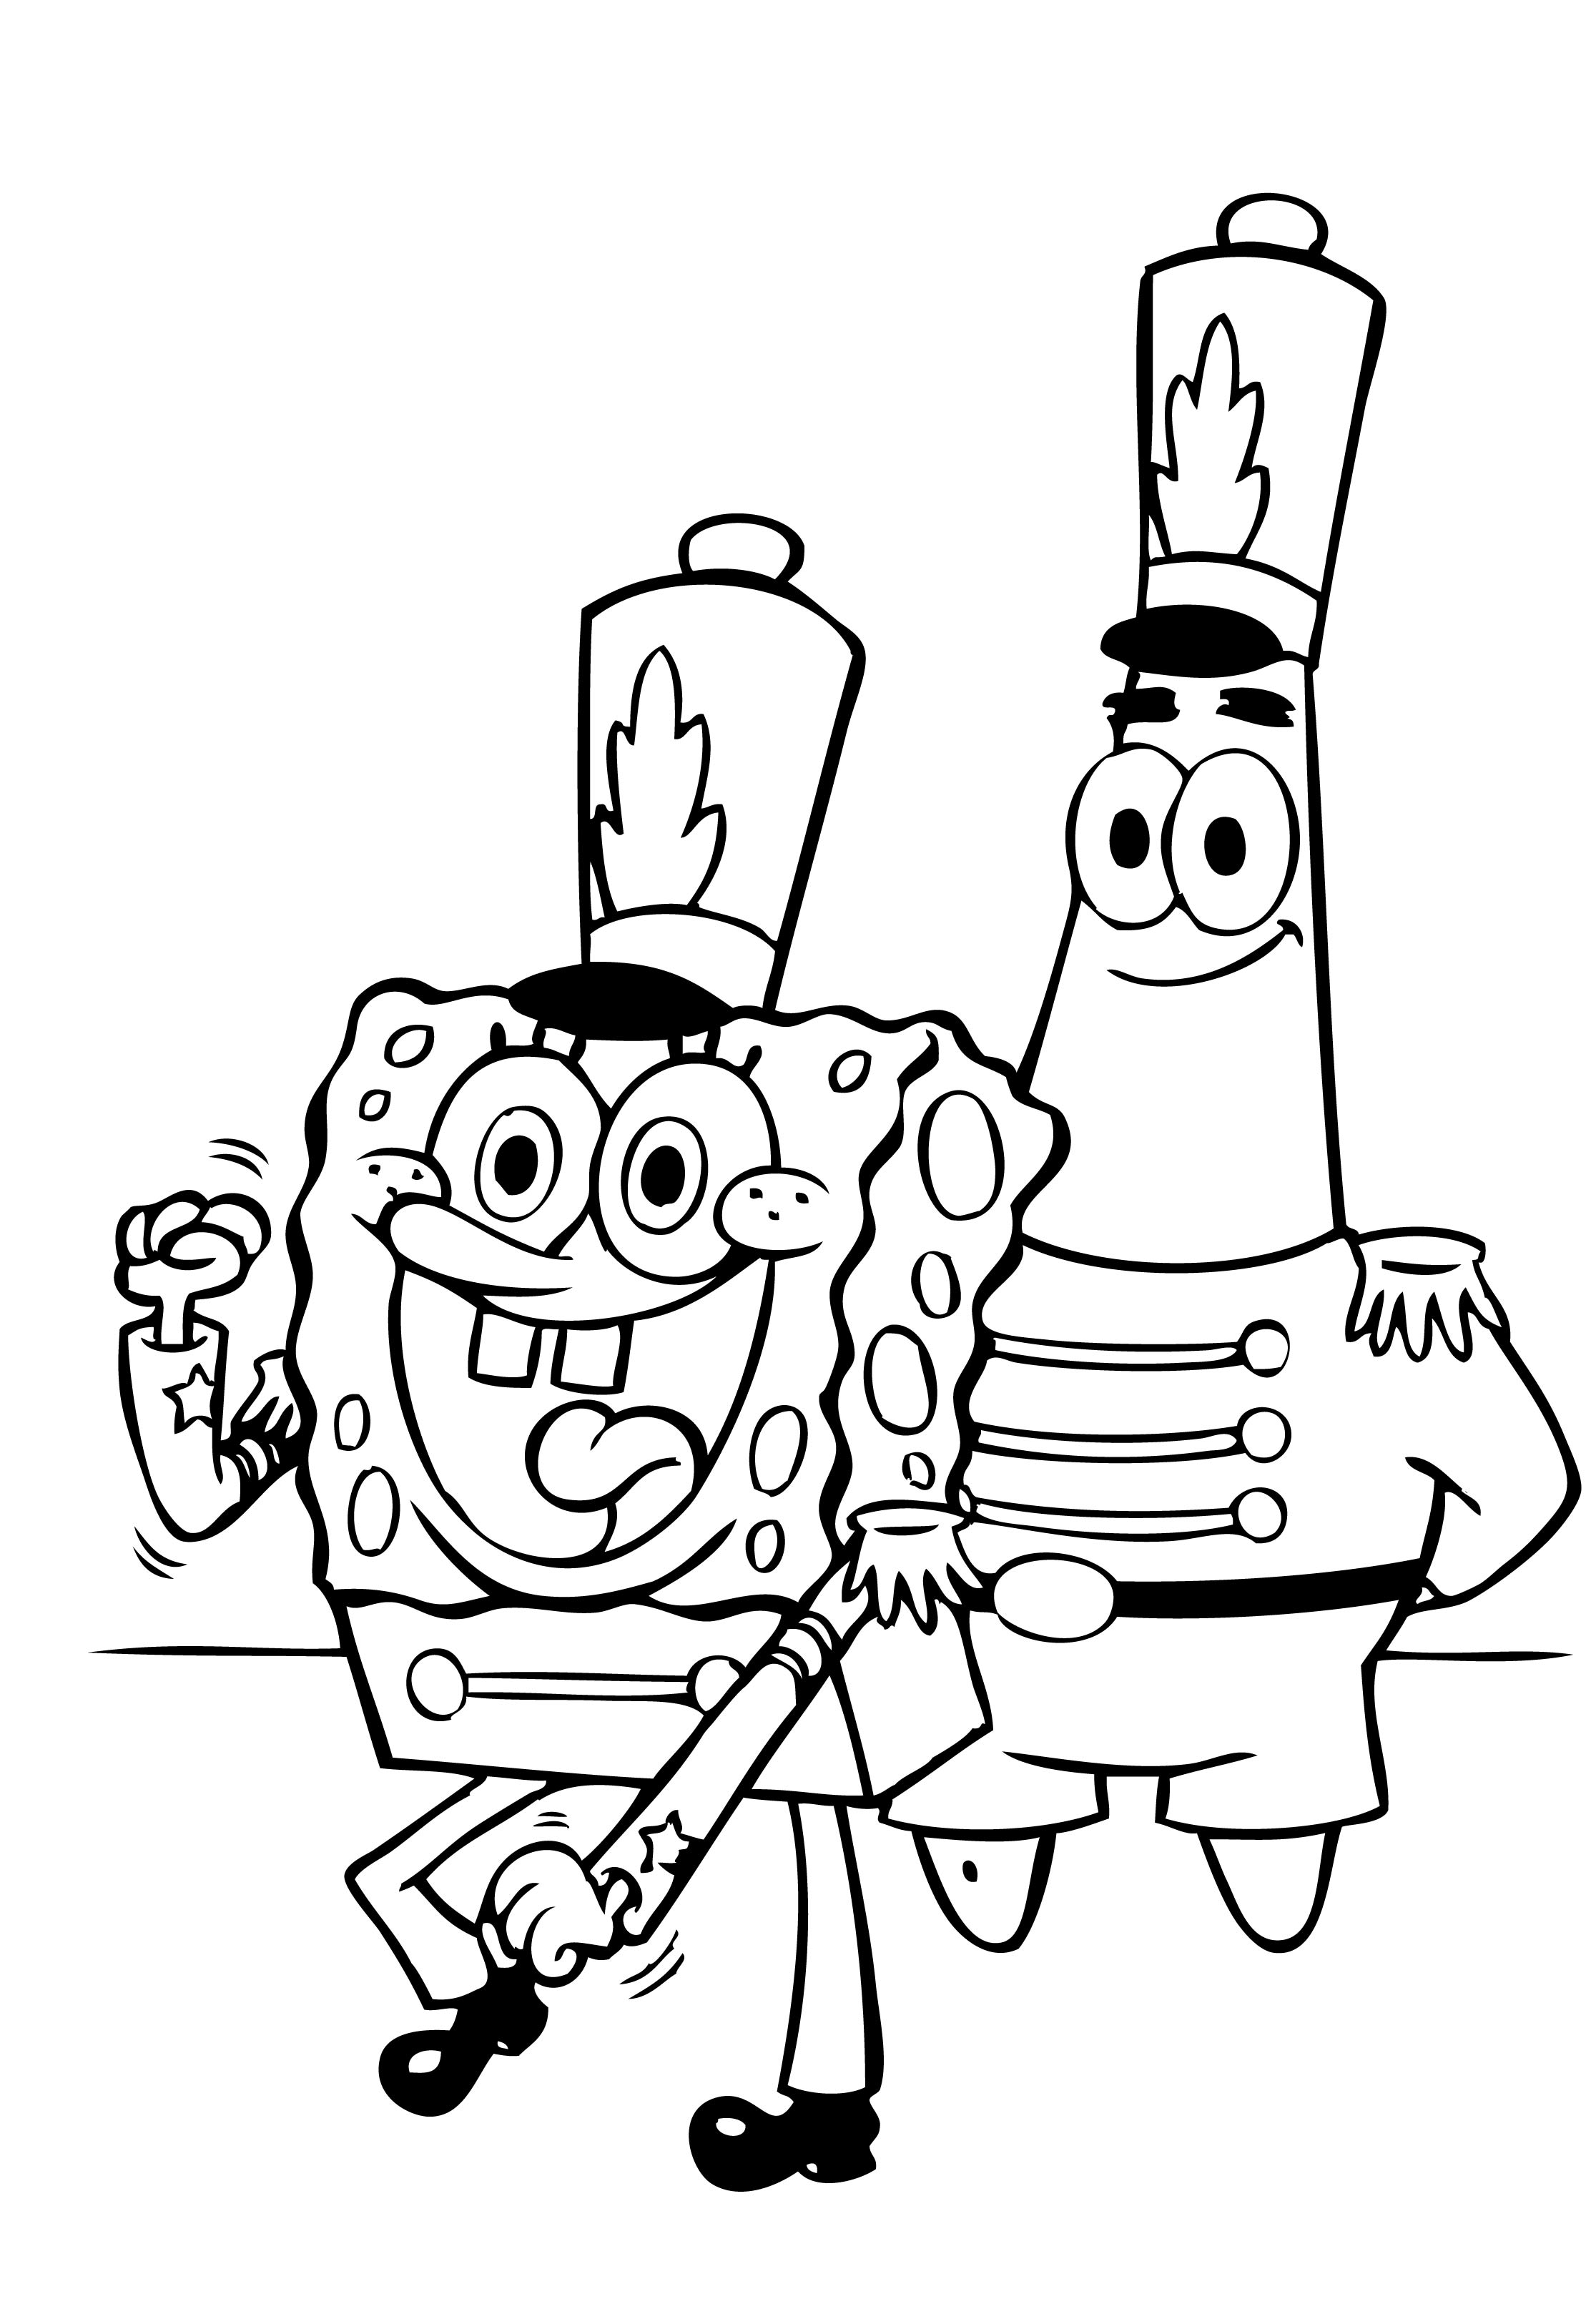 Spongebob Bob Coloring Page : Spongebob Squarepants Coloring Pages